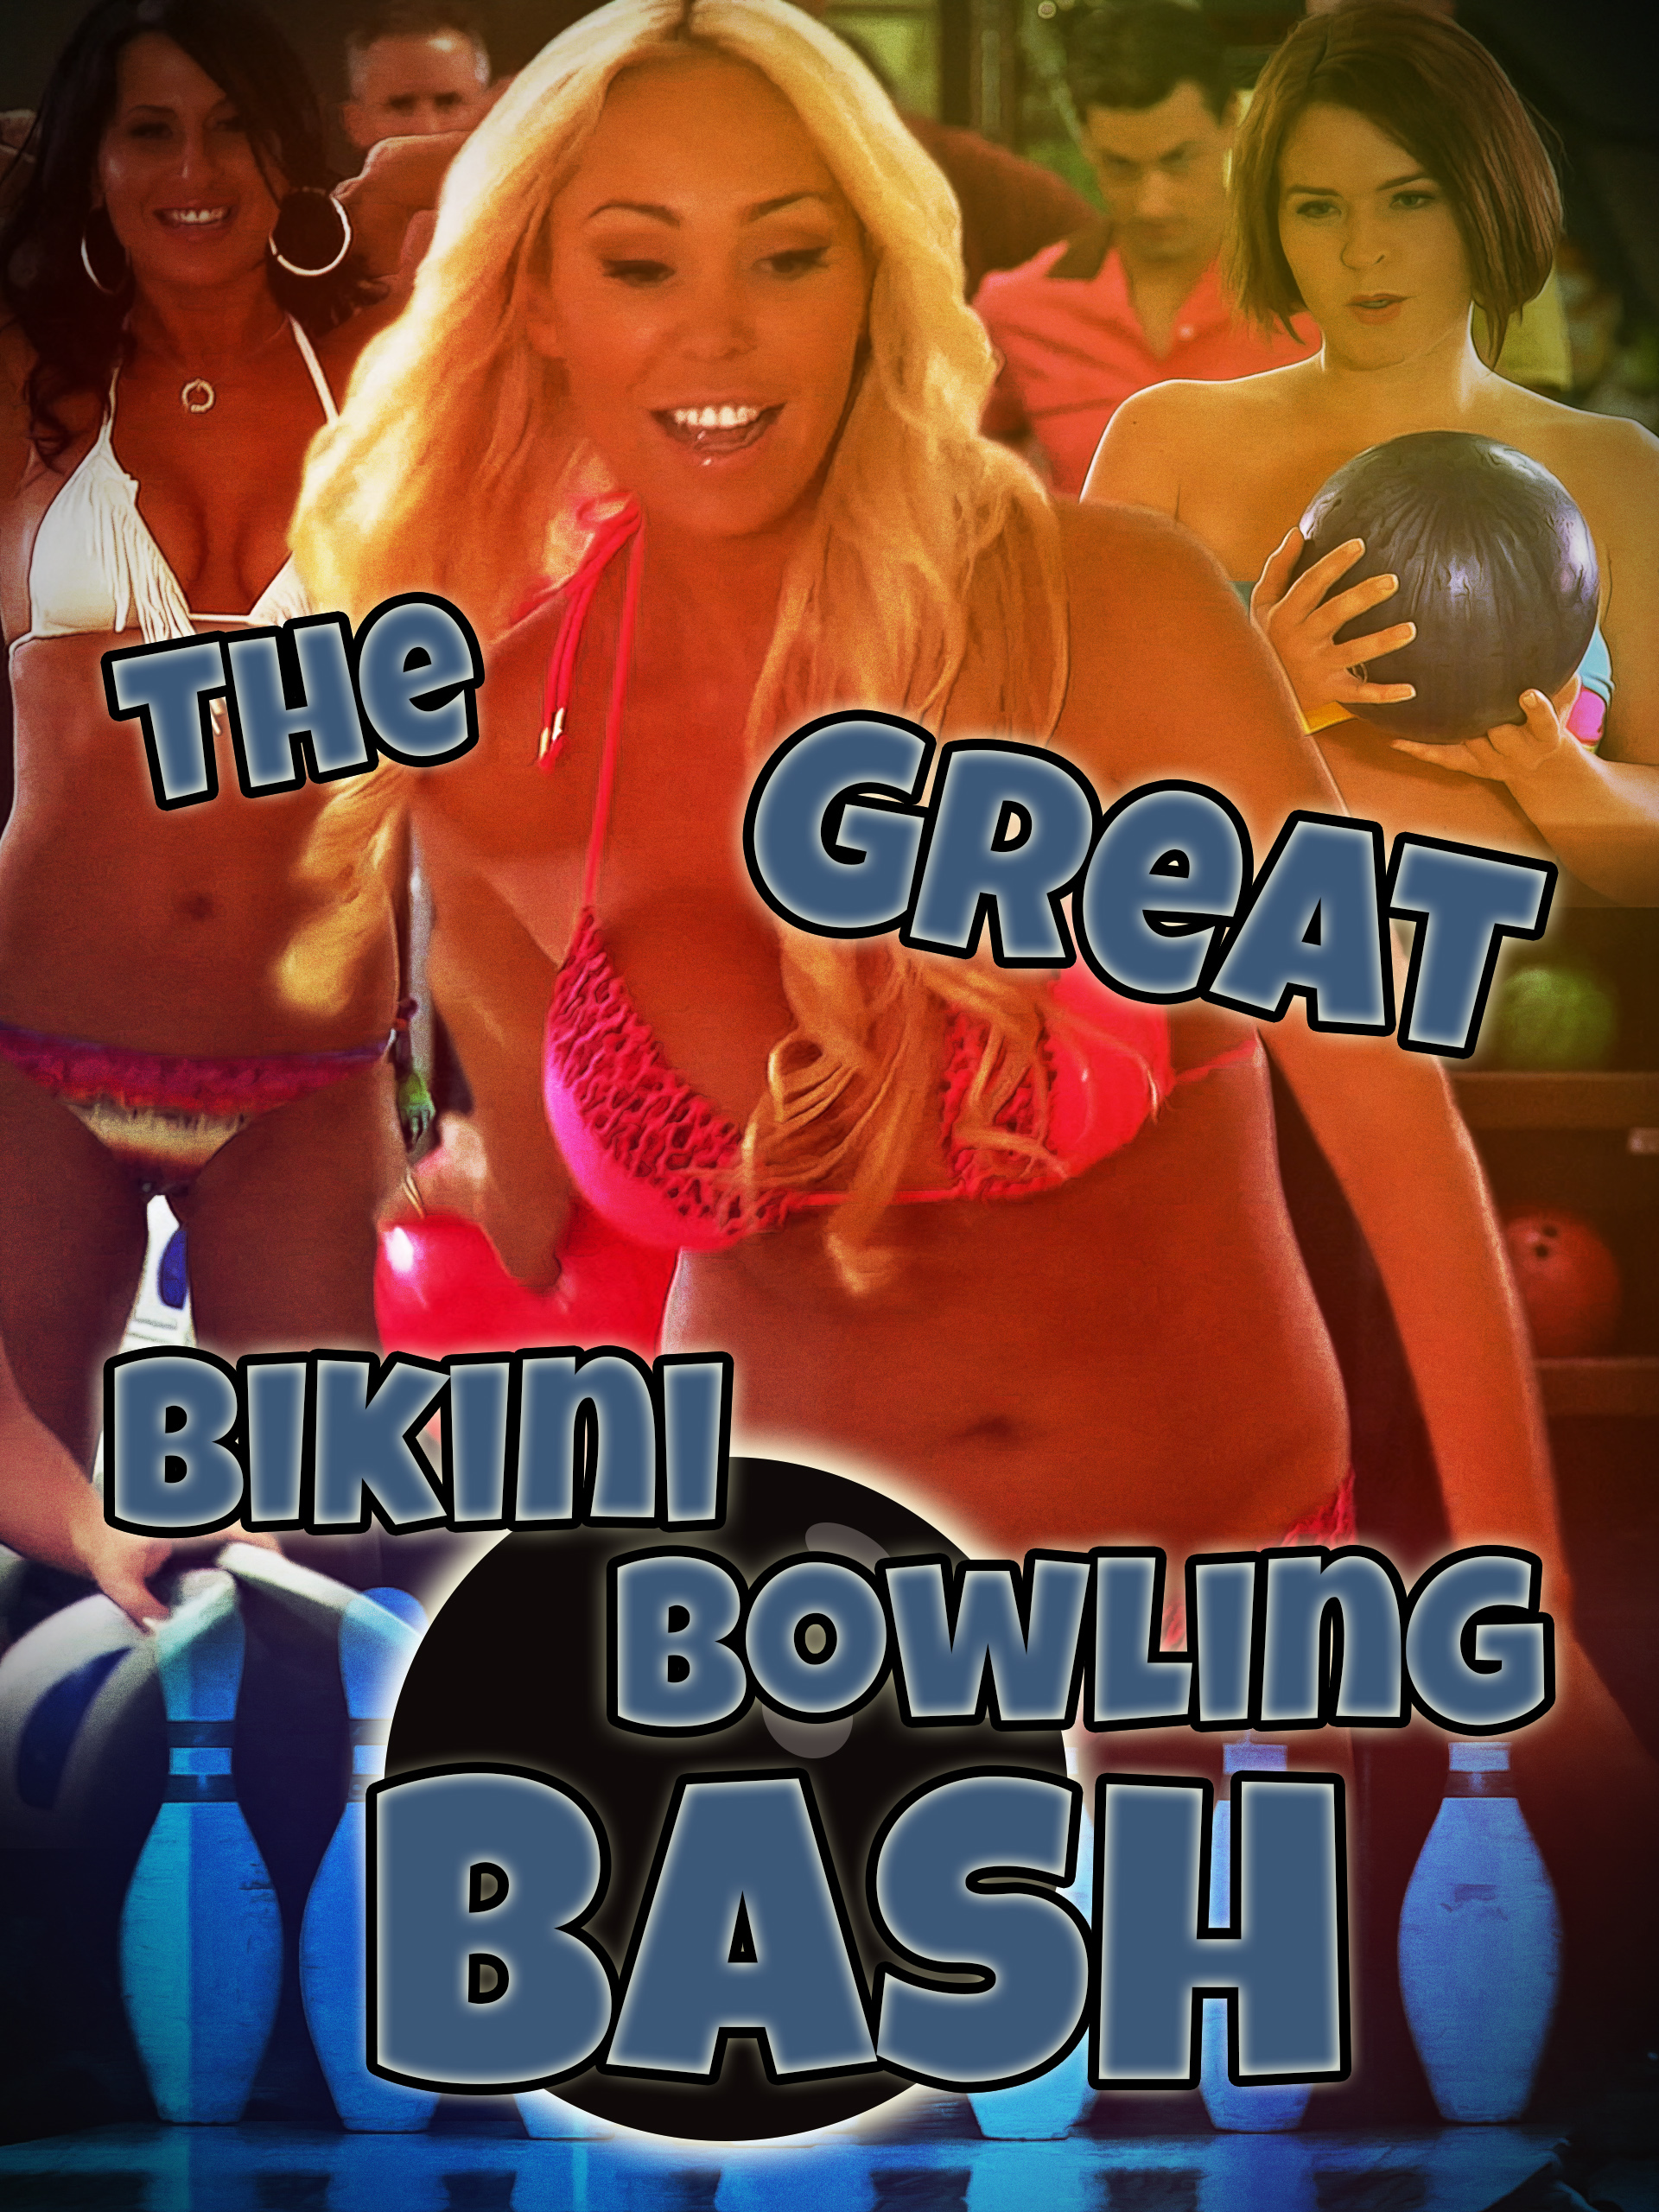 Great Bikini Bowling Bash (2014) Screenshot 2 